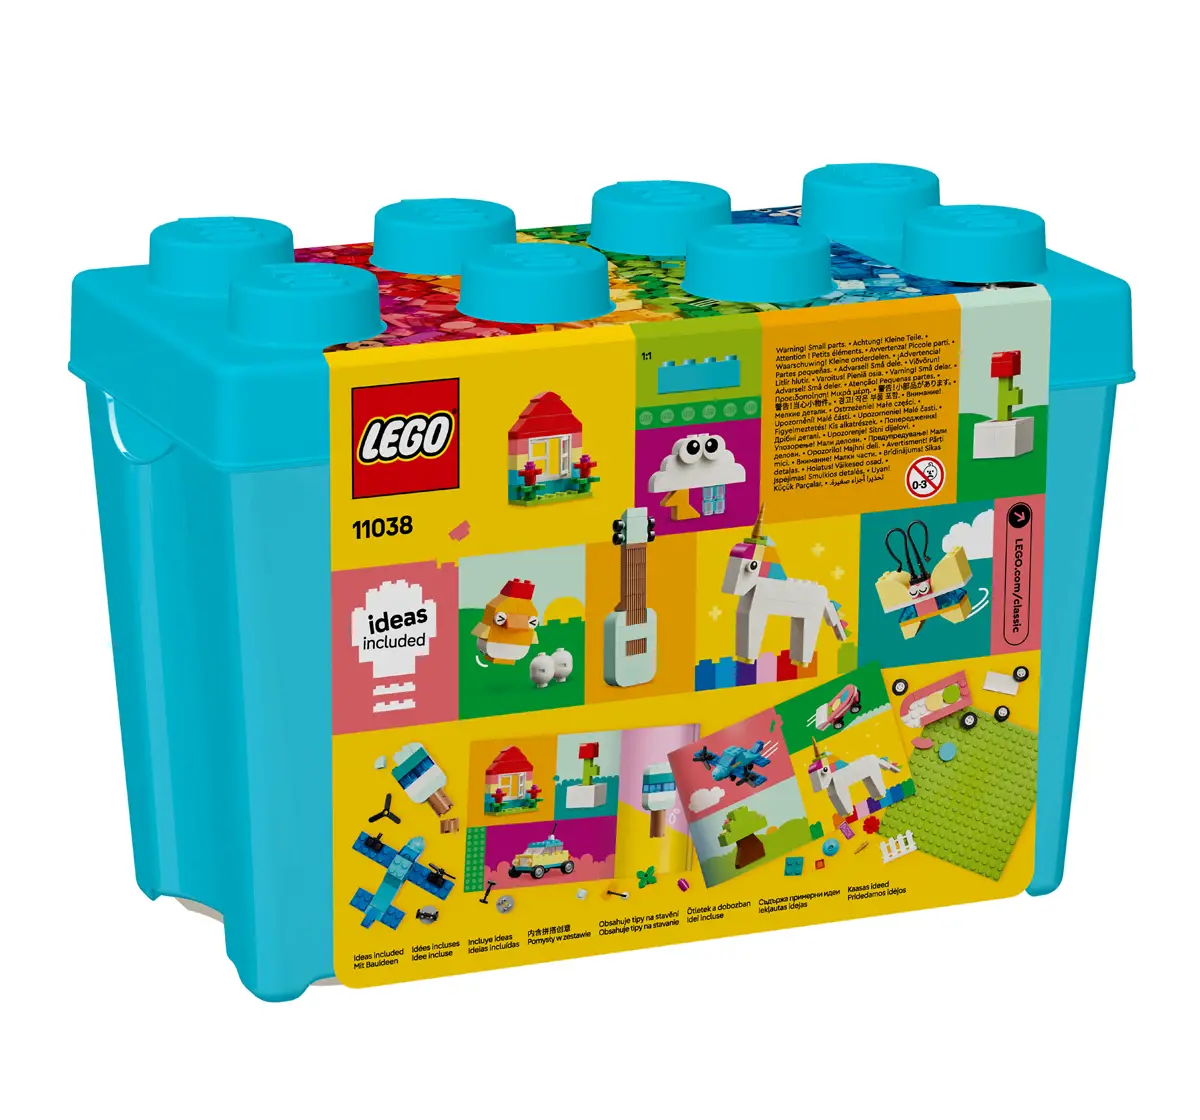 LEGO Classic Vibrant Creative Brick Box Toy Set 11038 (850 Pieces)